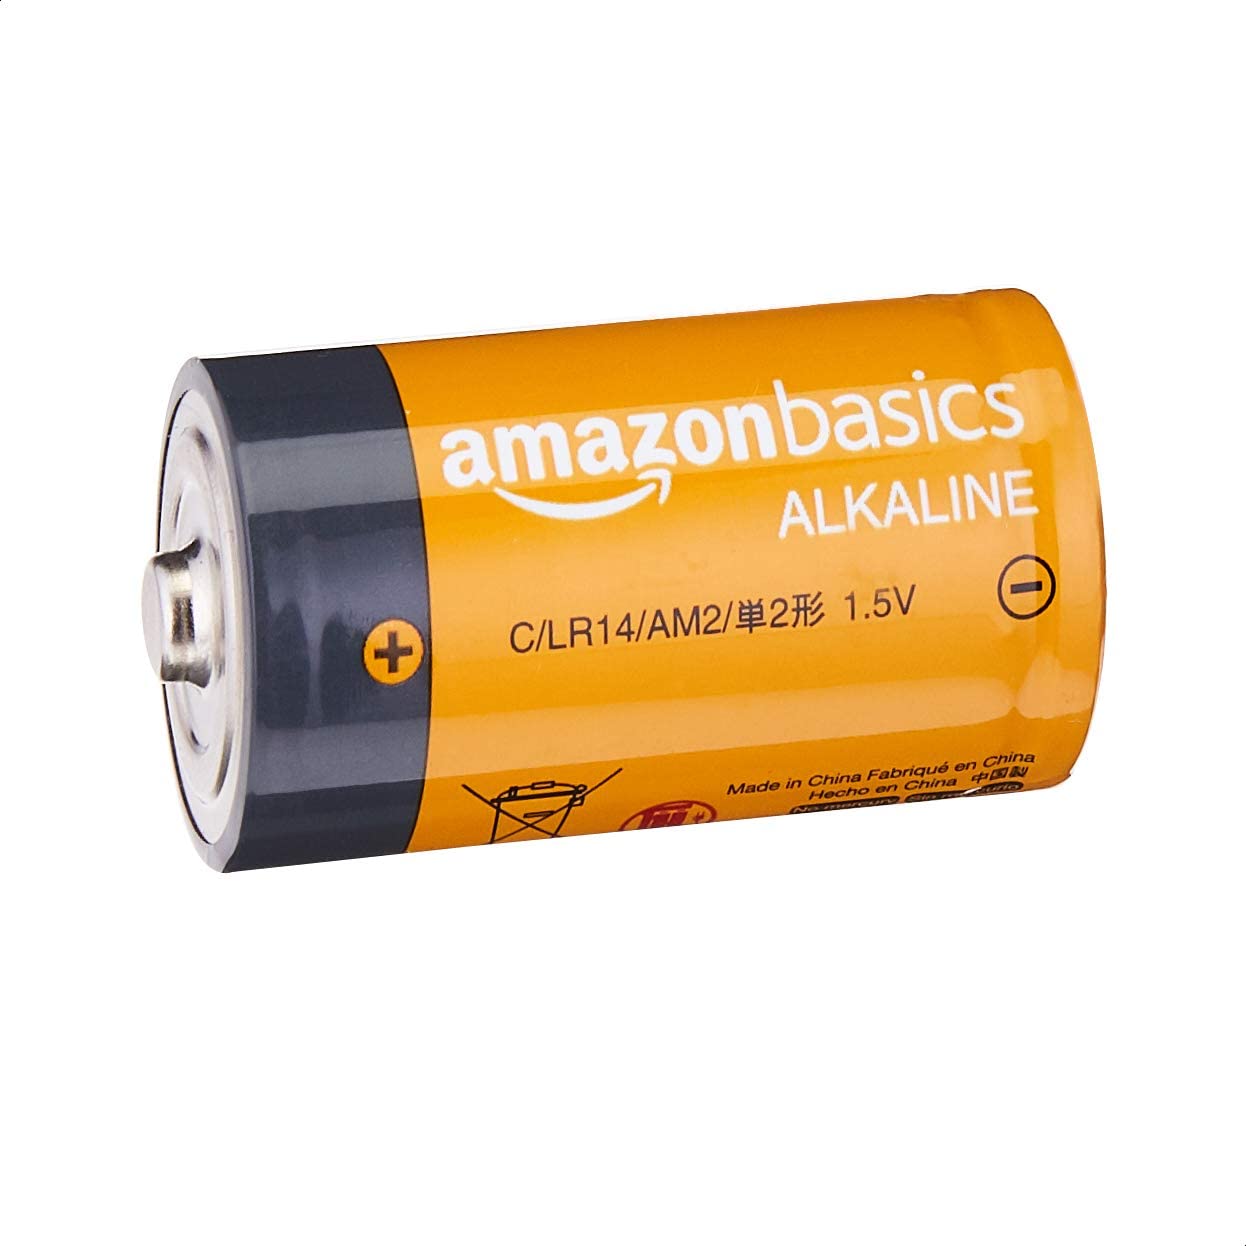 Amazon Basics 5 Pack C Cell All-Purpose Alkaline Batteries, 5-Year Shelf Life (LNC)